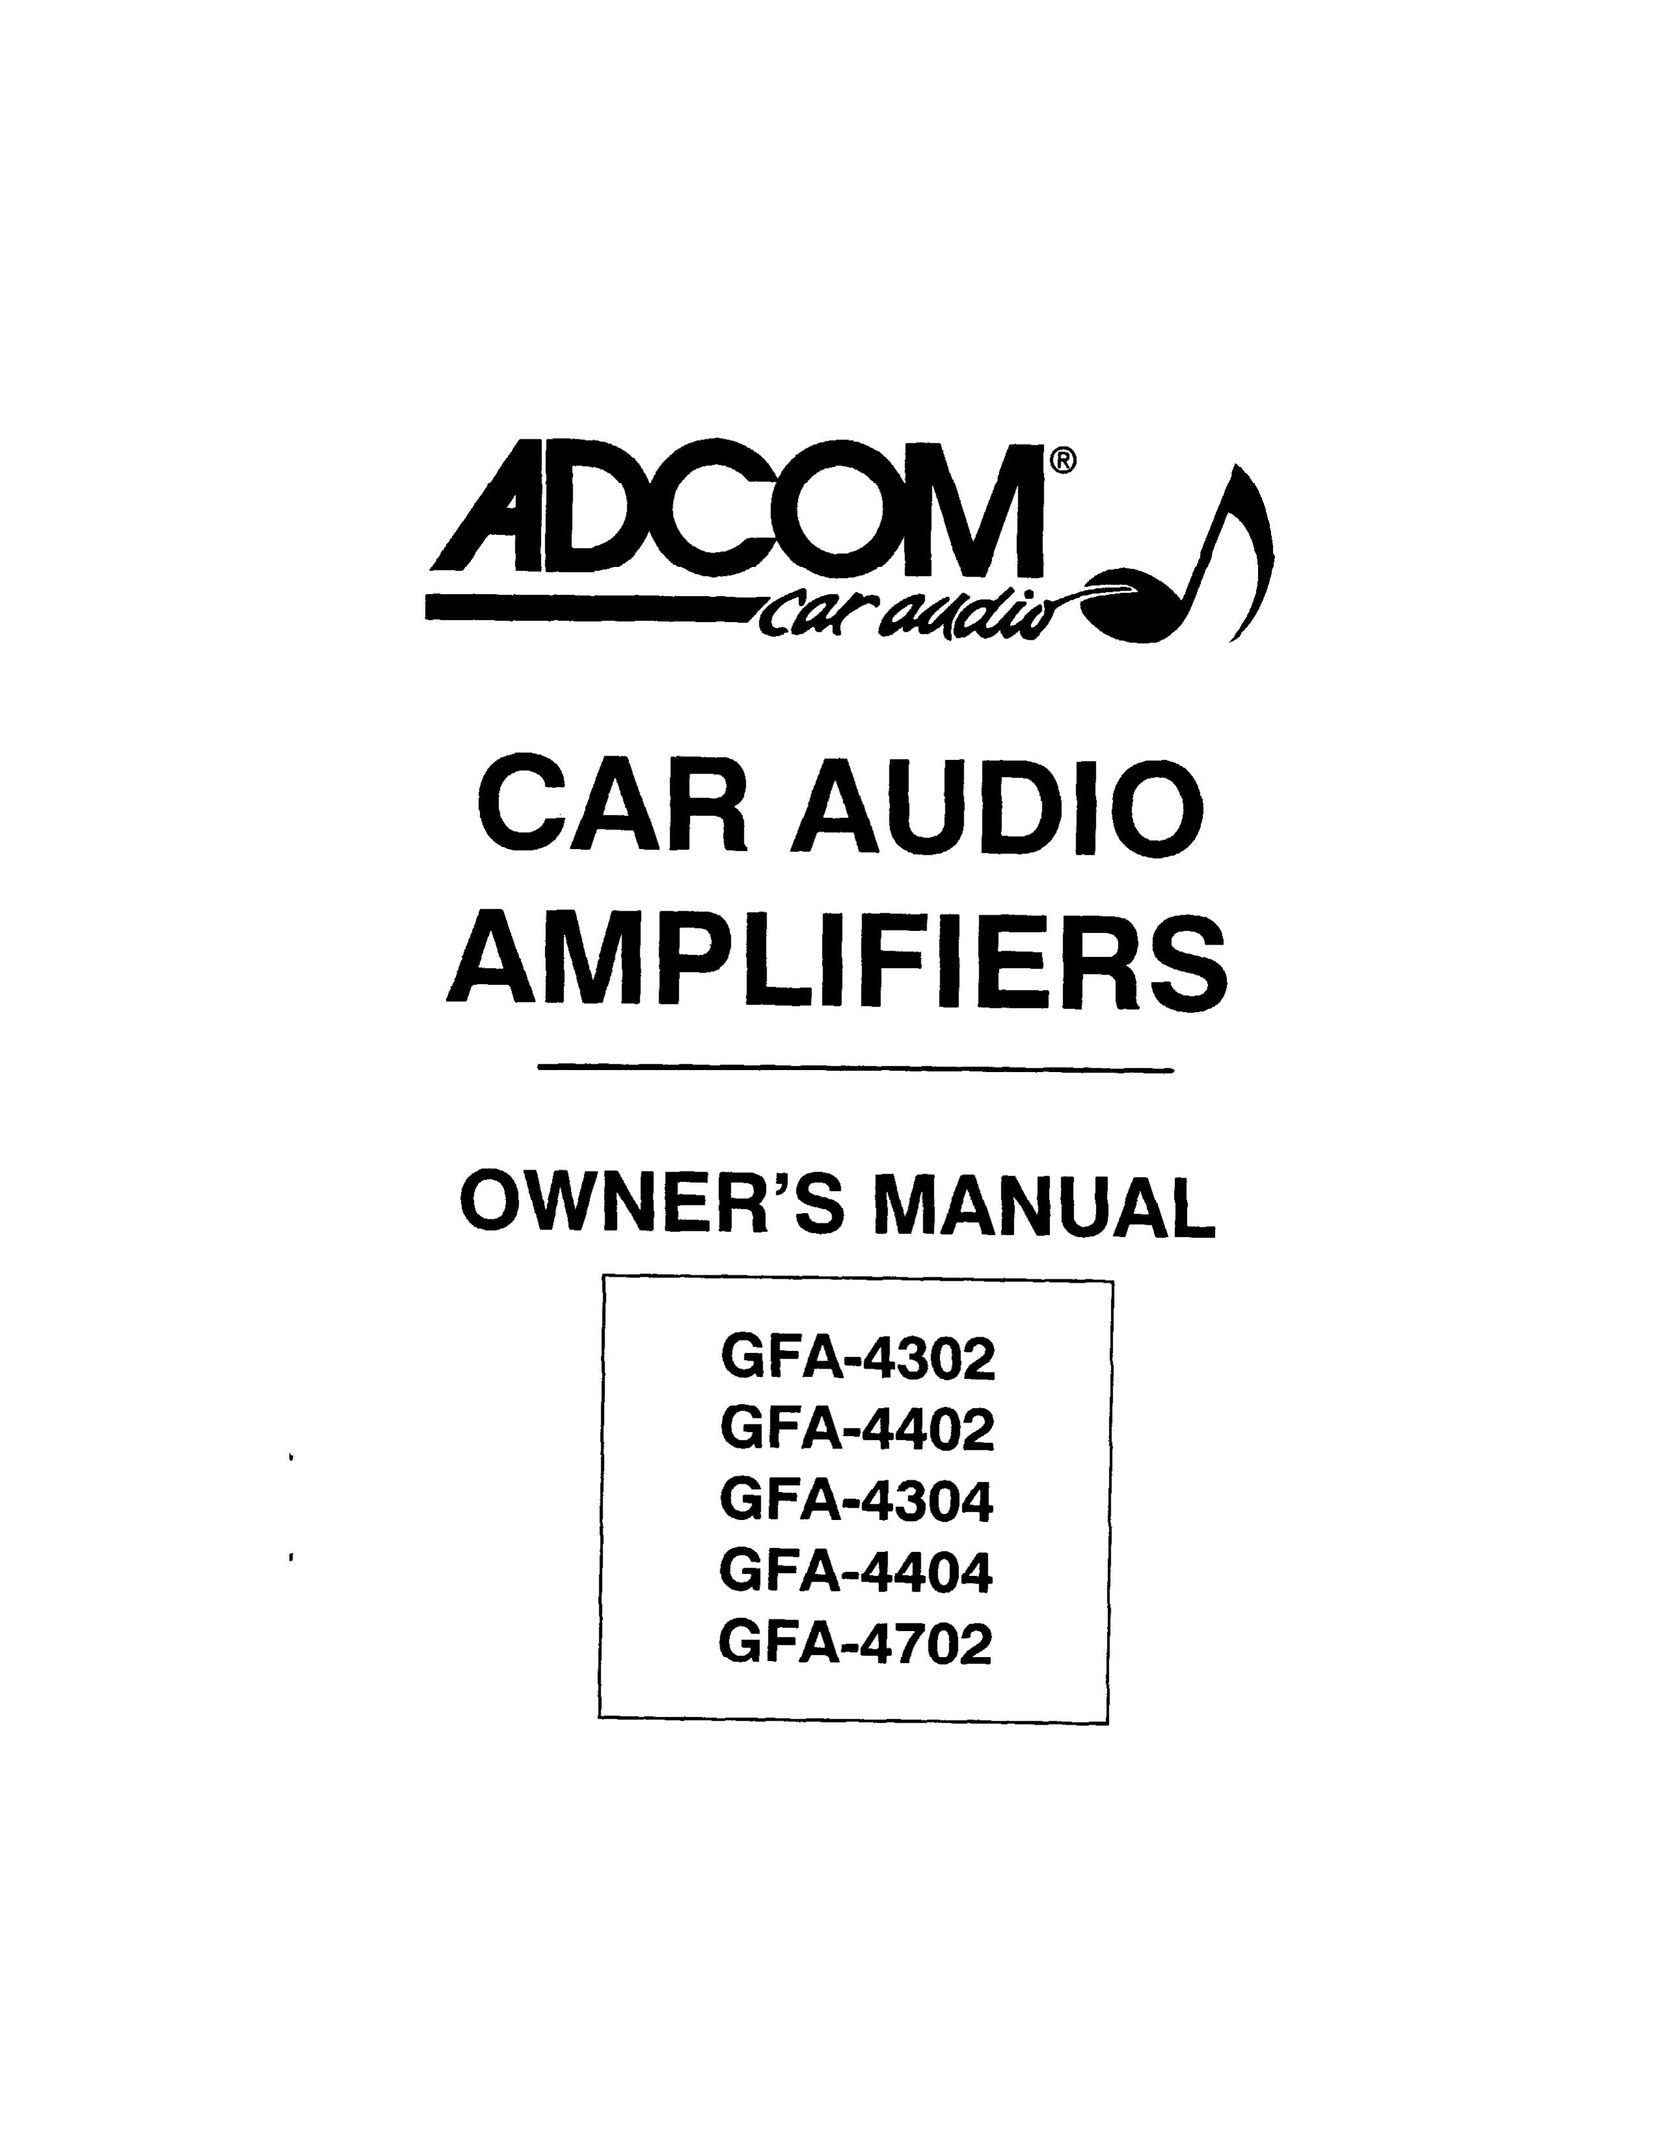 Adcom GFA-4304 Car Amplifier User Manual (Page 1)